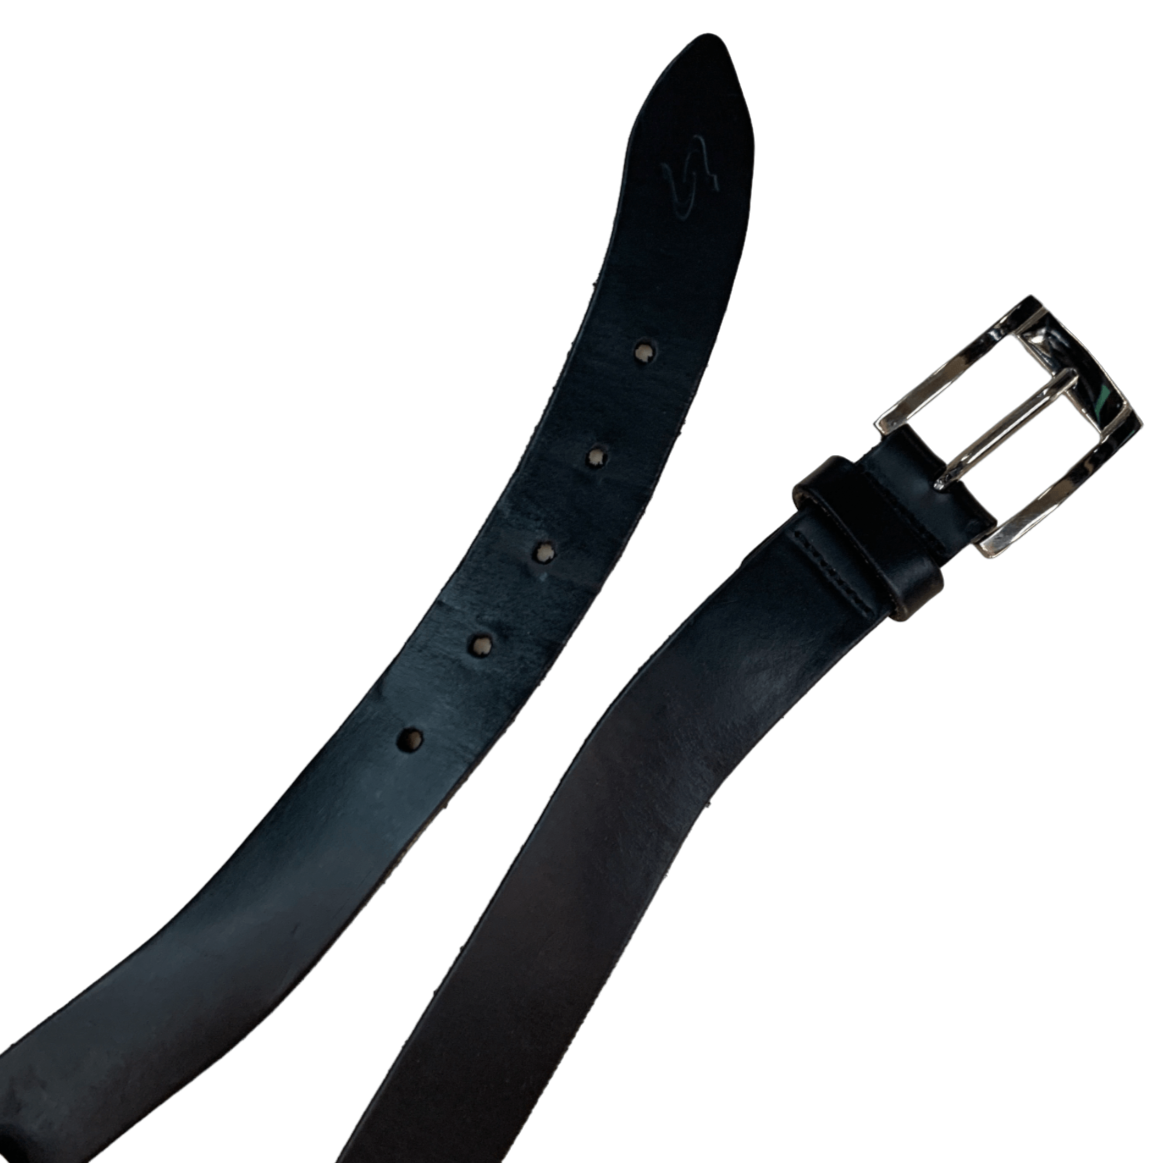 Ebrazio 'Curva' Curved Handmade Leather Belt 